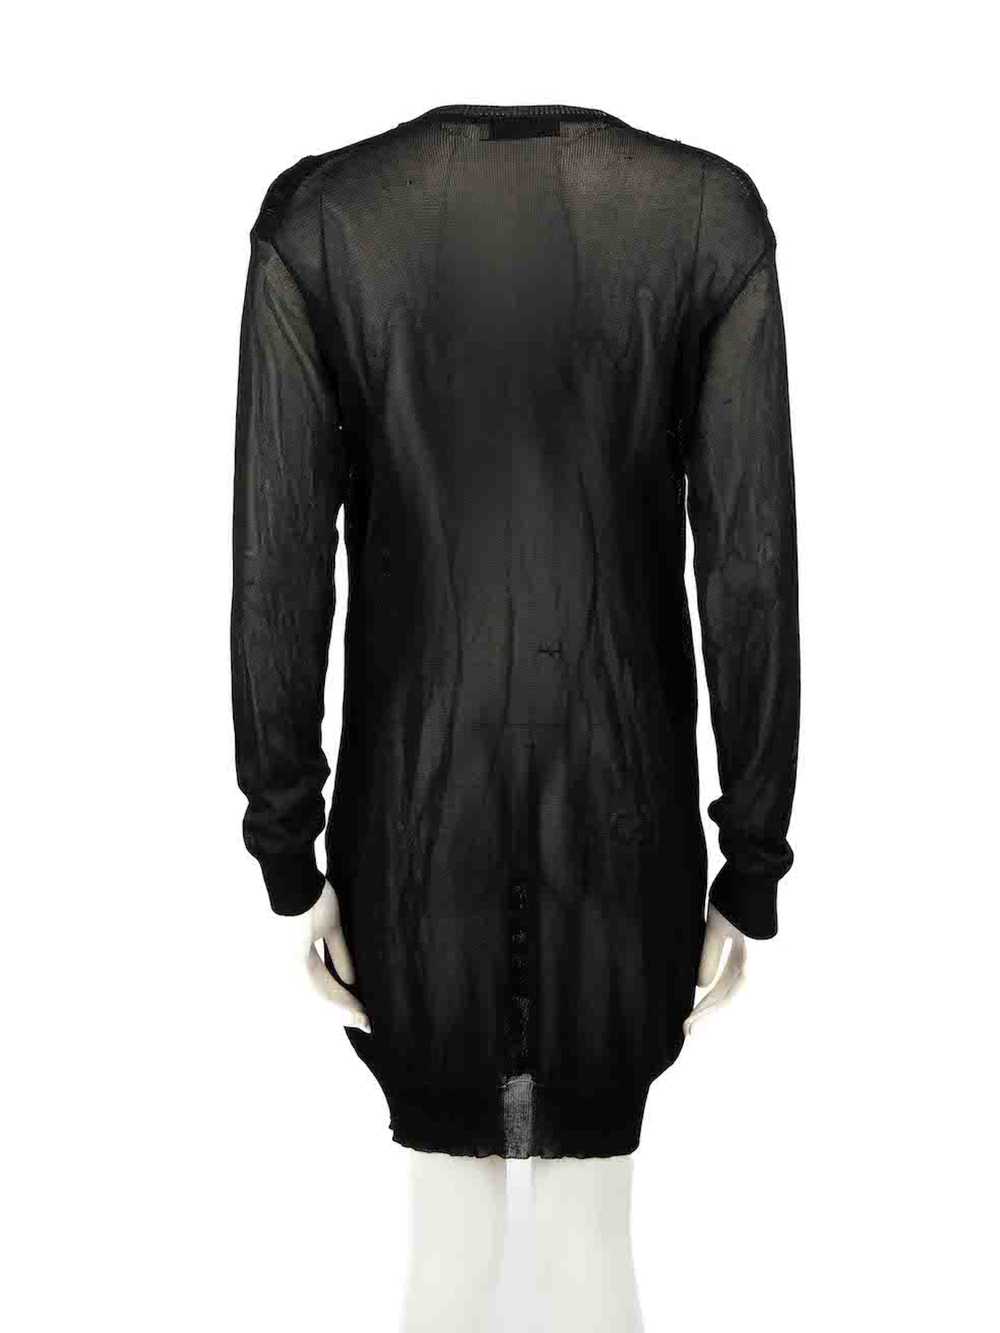 Stella McCartney Black Sequin Knit Jumper Dress - image 3